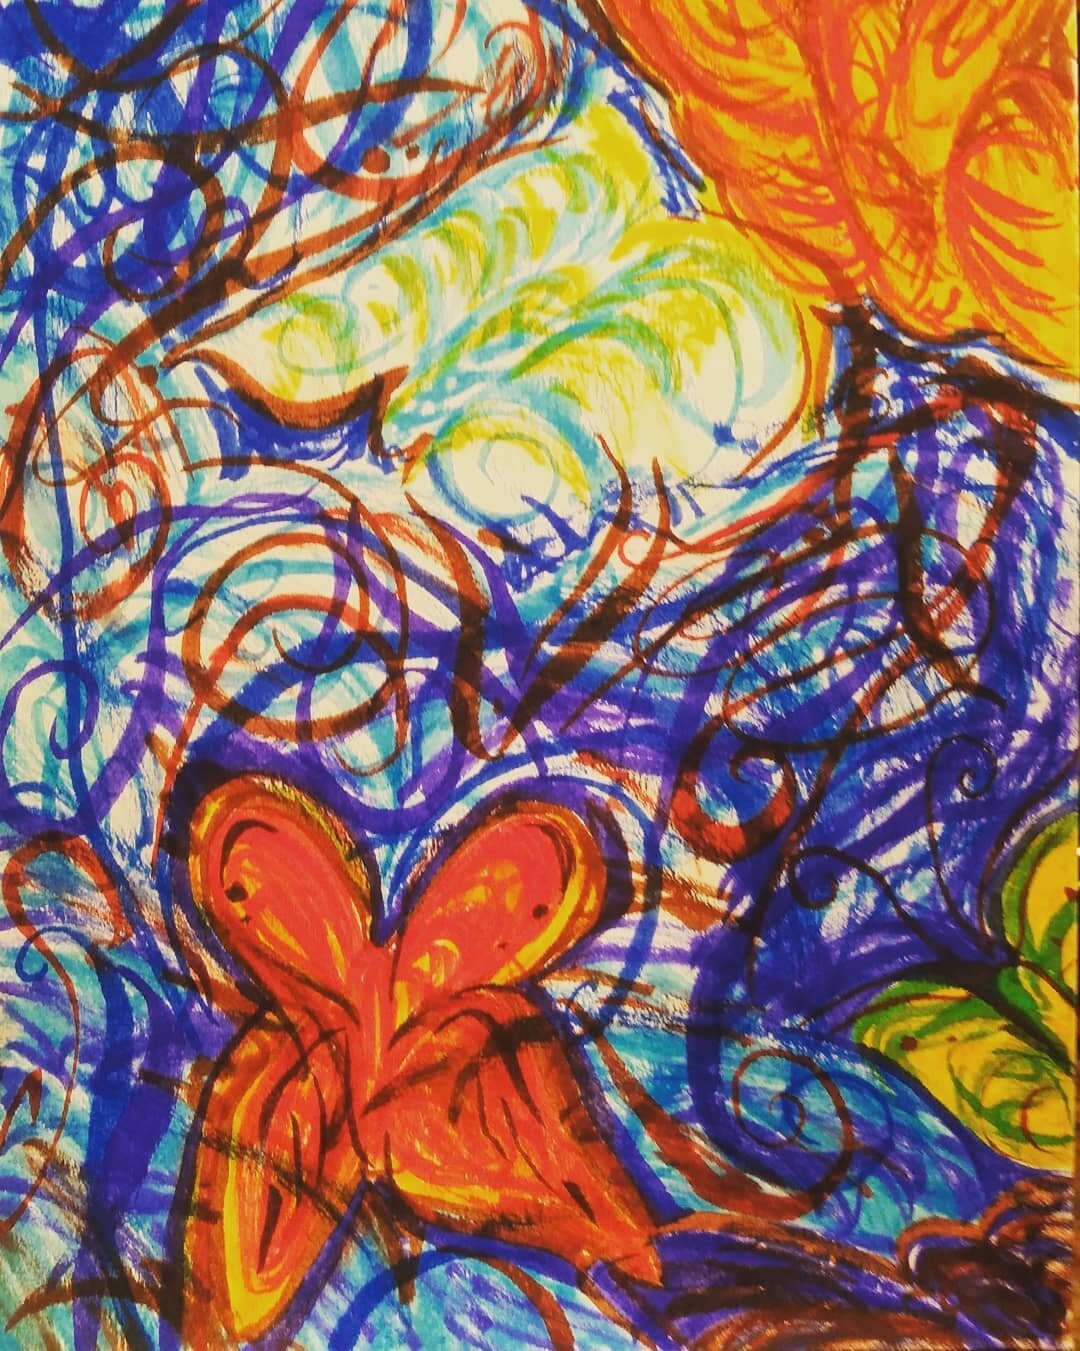 Free-floating

#markerdoodle #markerart #markerdrawing #brushpen #butterflyart #butterfly #butterflies #butterflies🦋 #colorfulart #energeticart #skyart #cloudart #doodle #portlandartist #pdxartist #psychedelicart #portlandsky #windyday #cloudyday #c